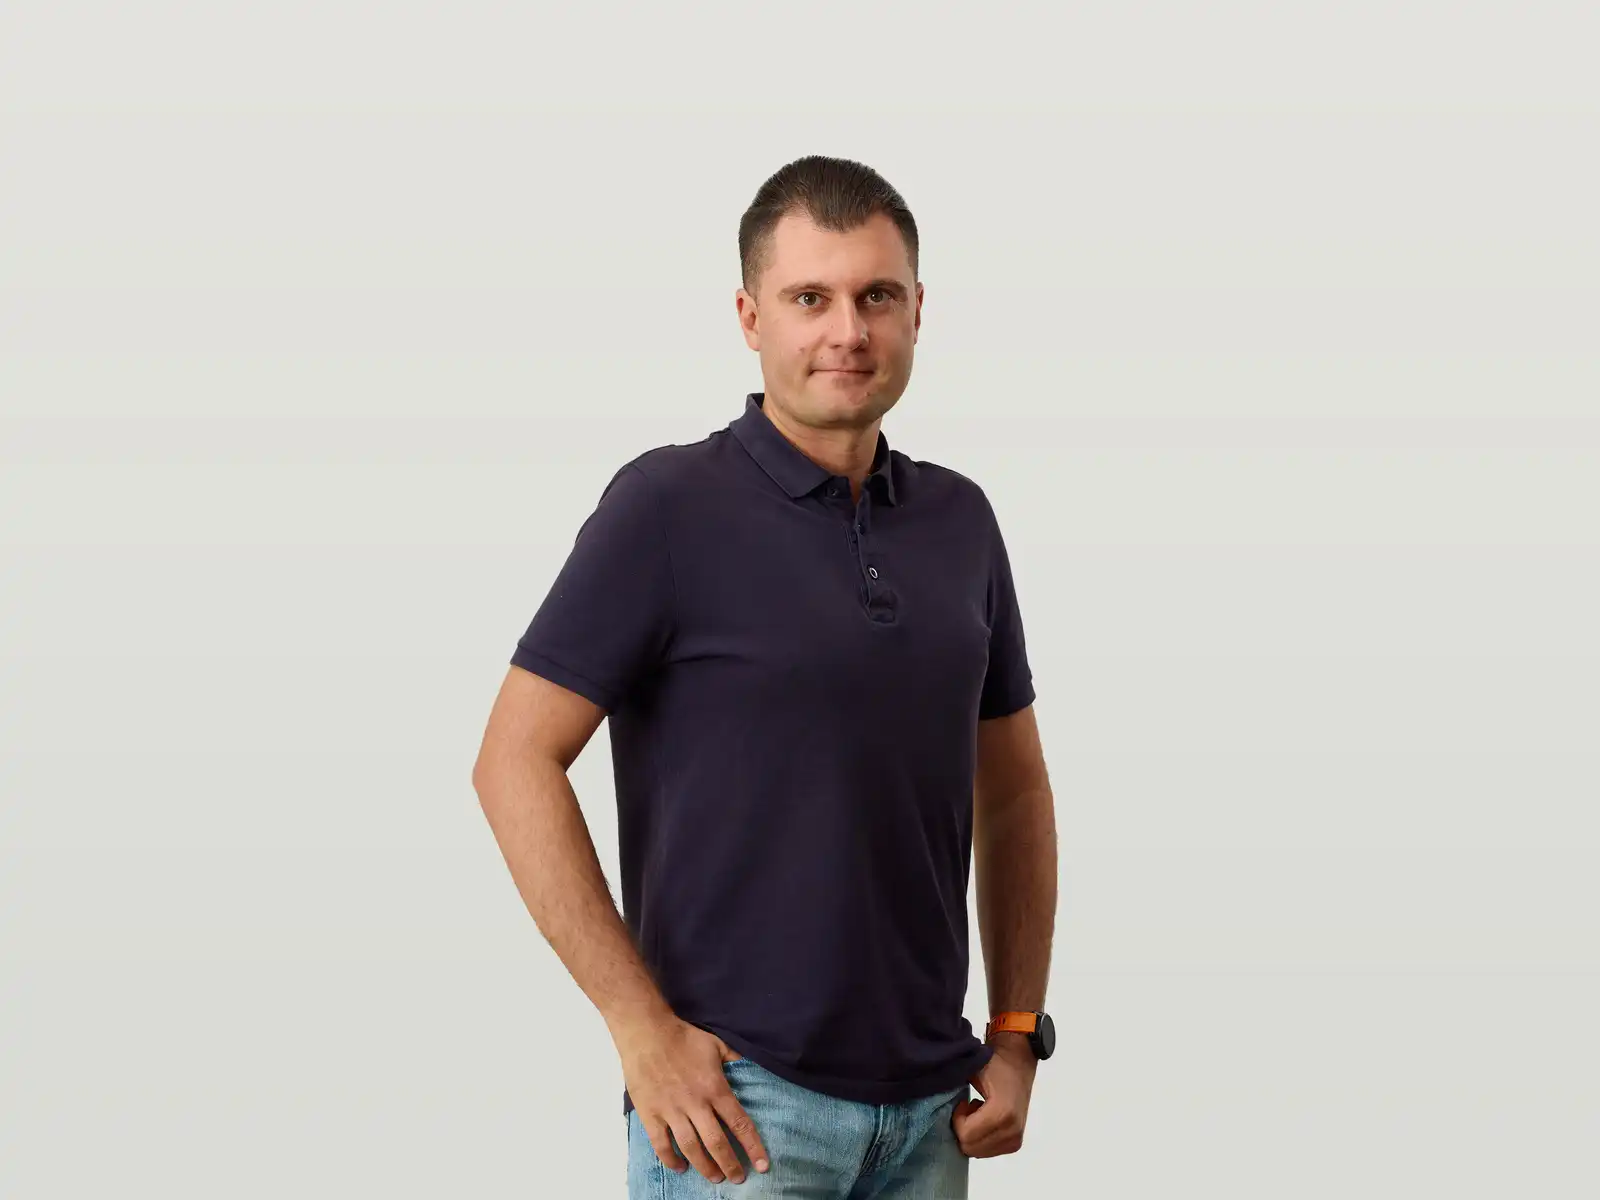 A profile image of Andrei Vsiakikh